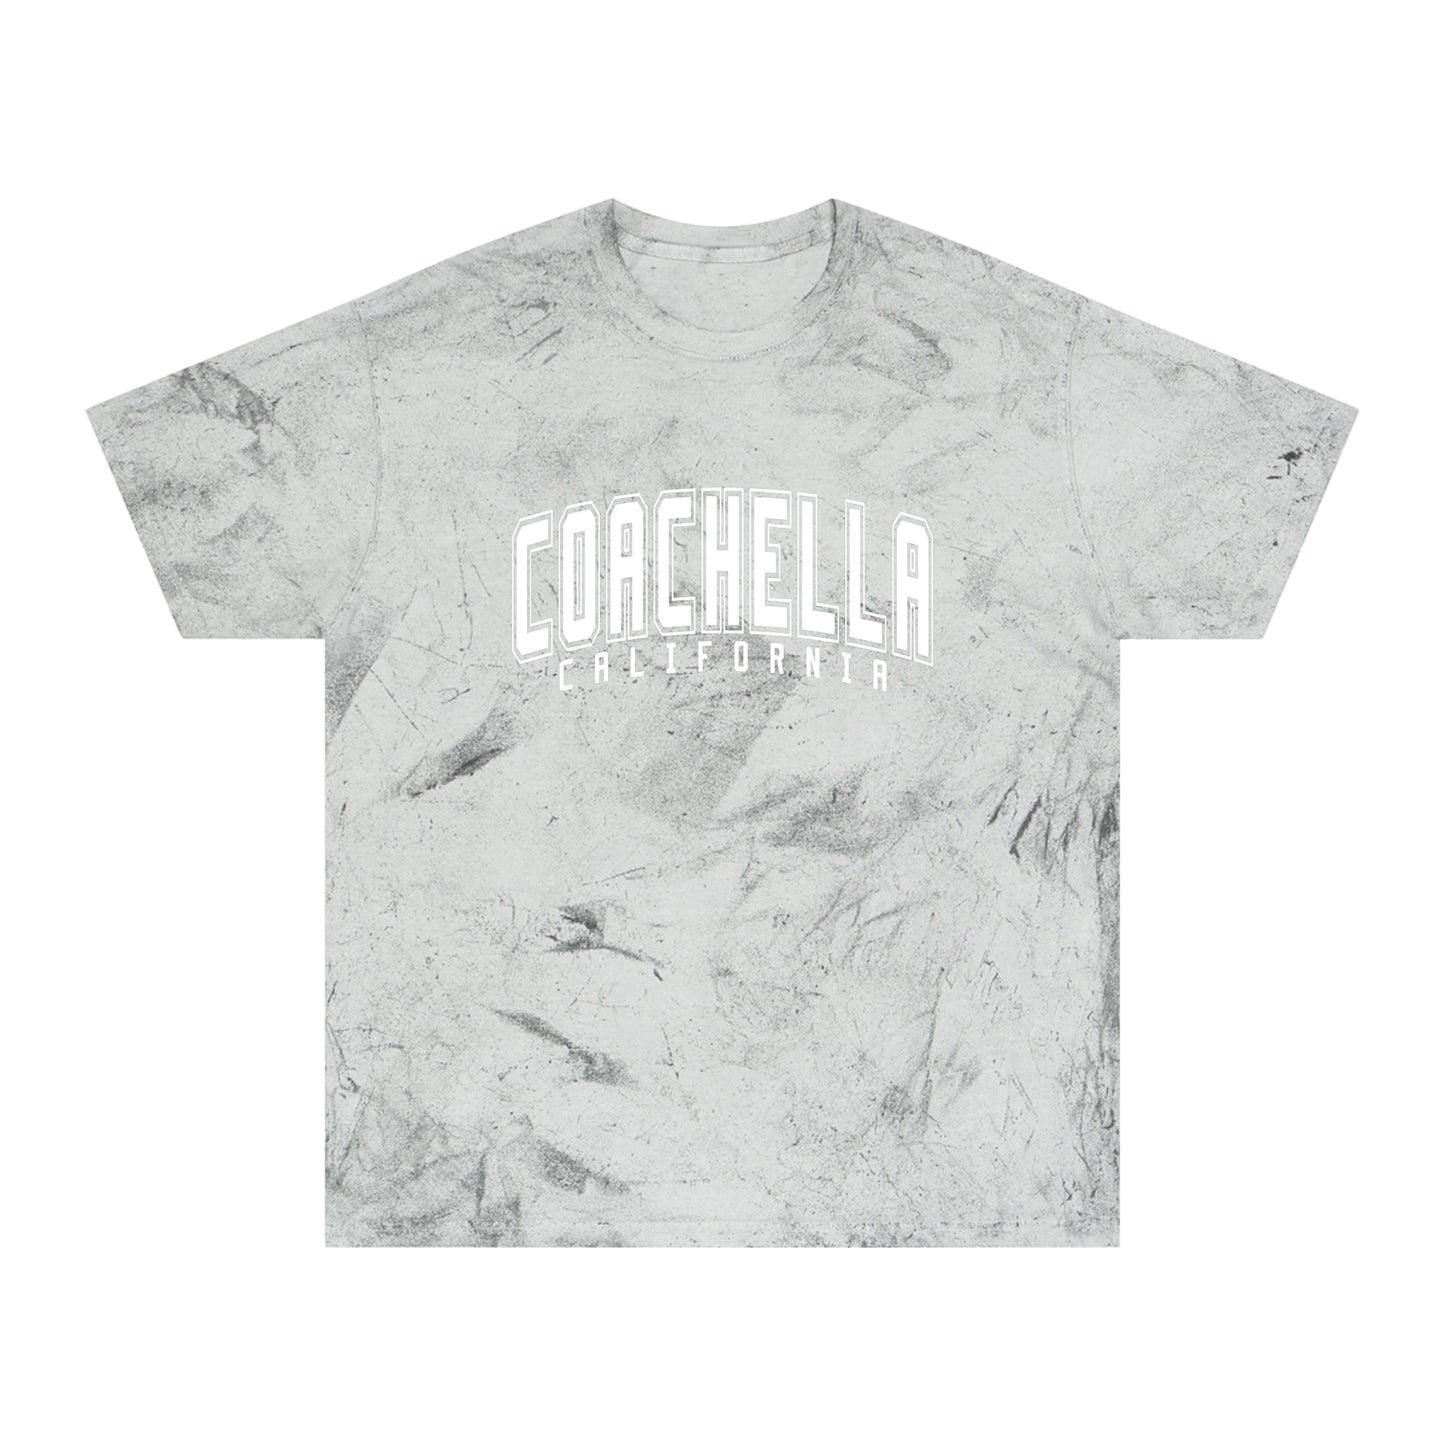 Coachella California Premium Dye Bomb T-Shirt